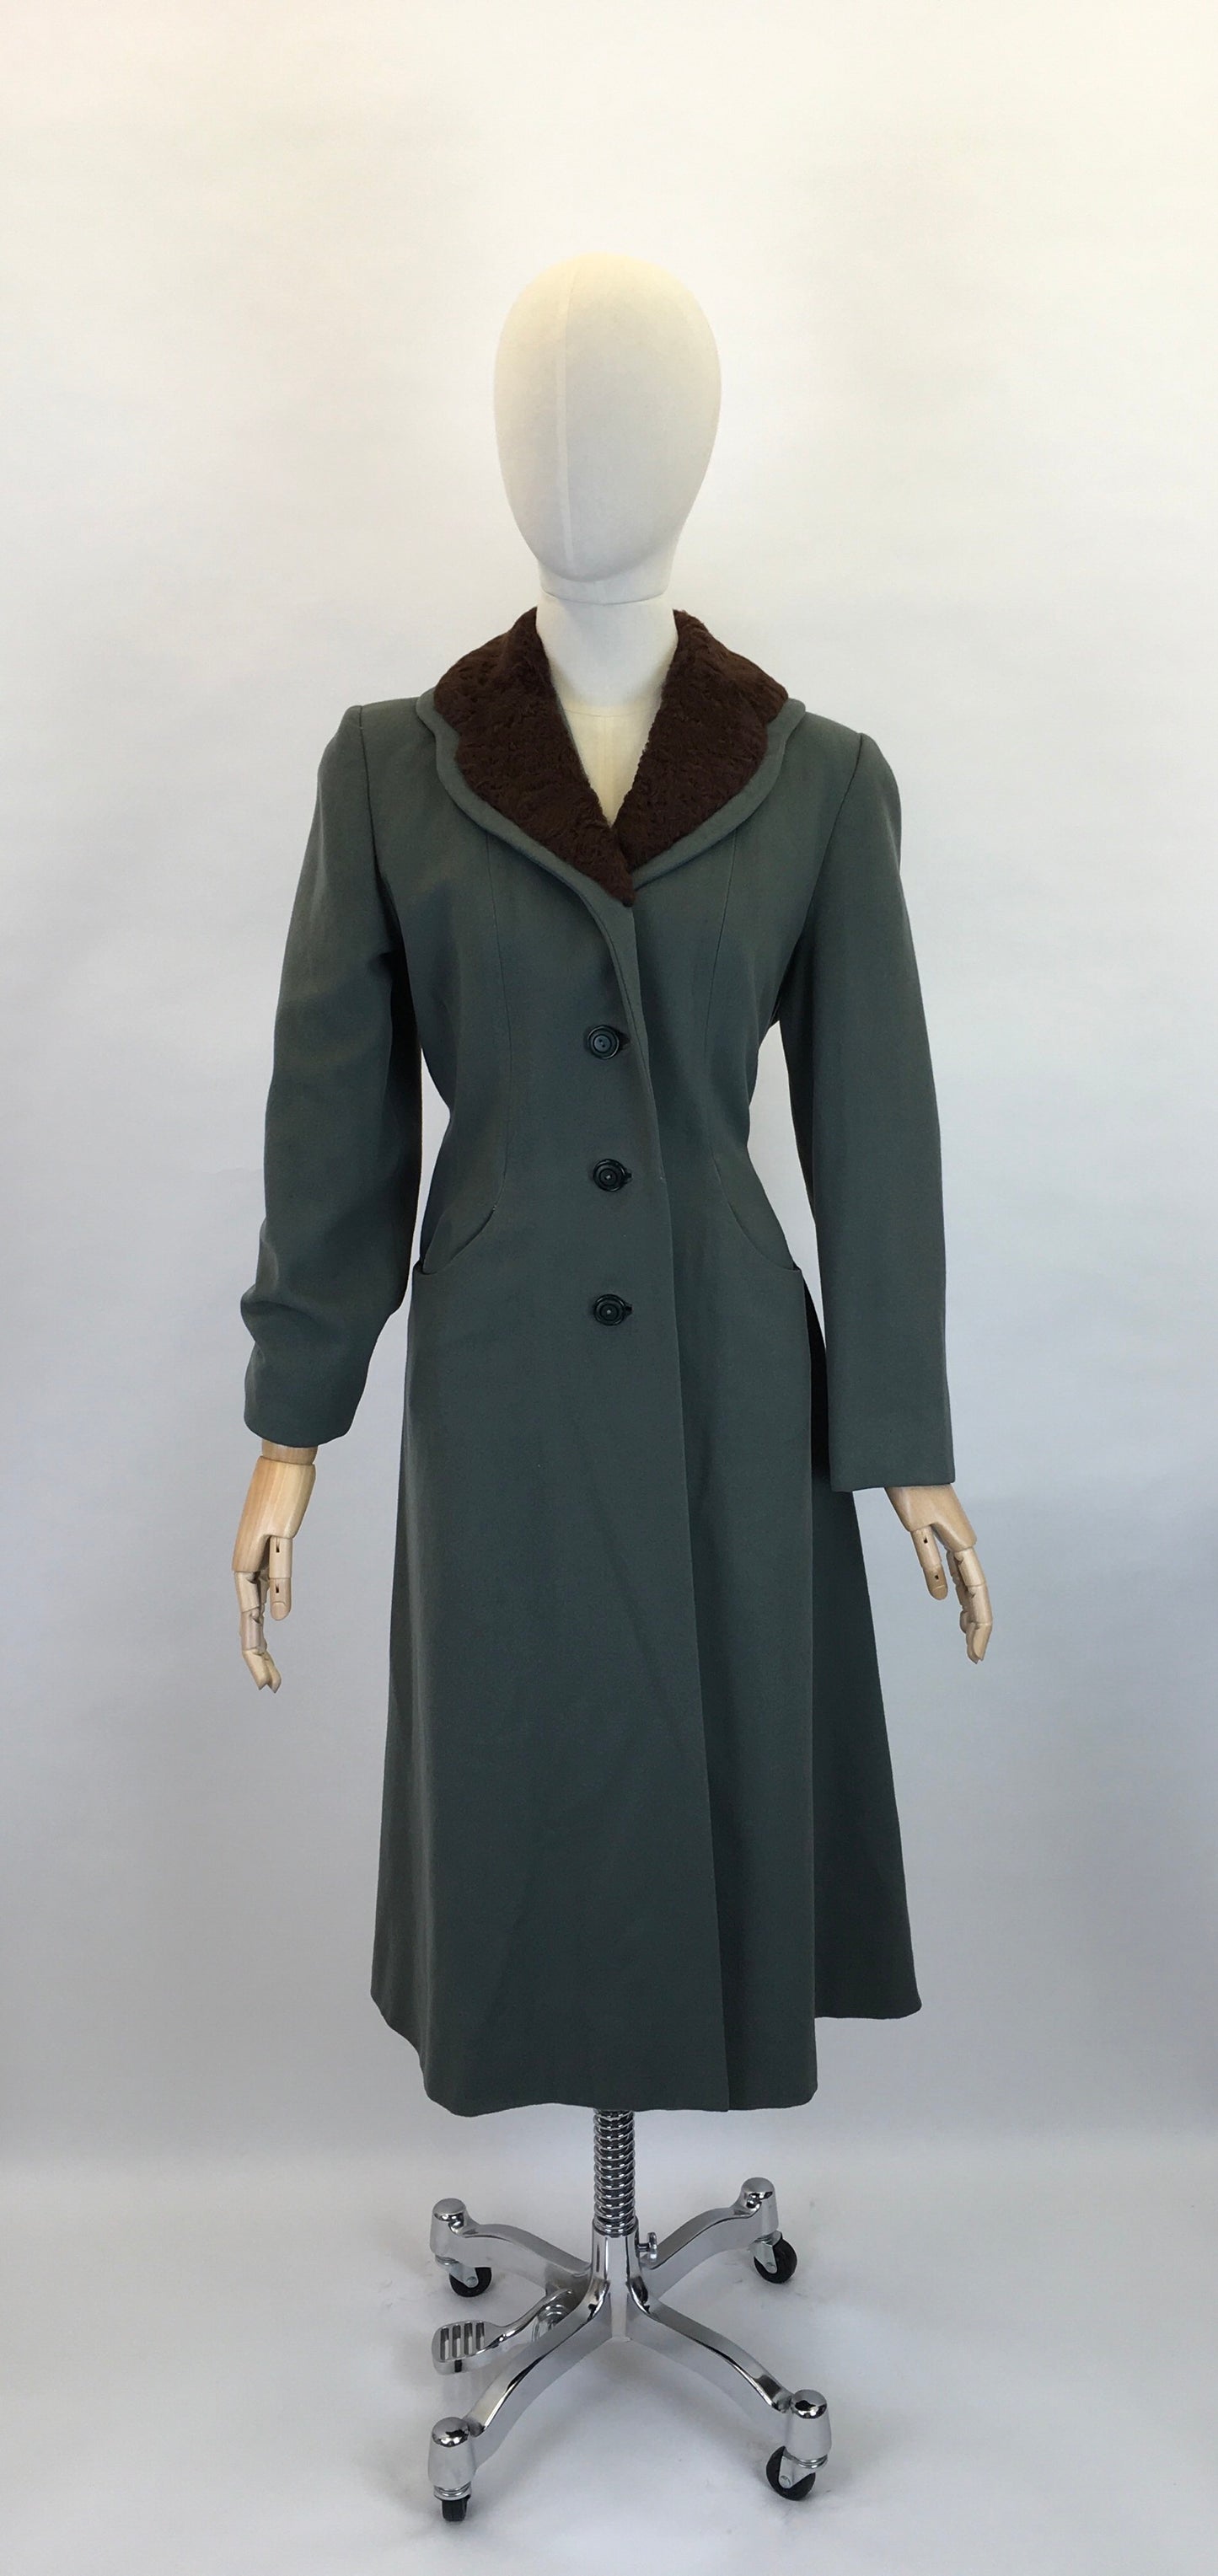 Original 1940s Duck Egg Wool Princess Coat with Fur Trim - Stunning 40’s Silhouette